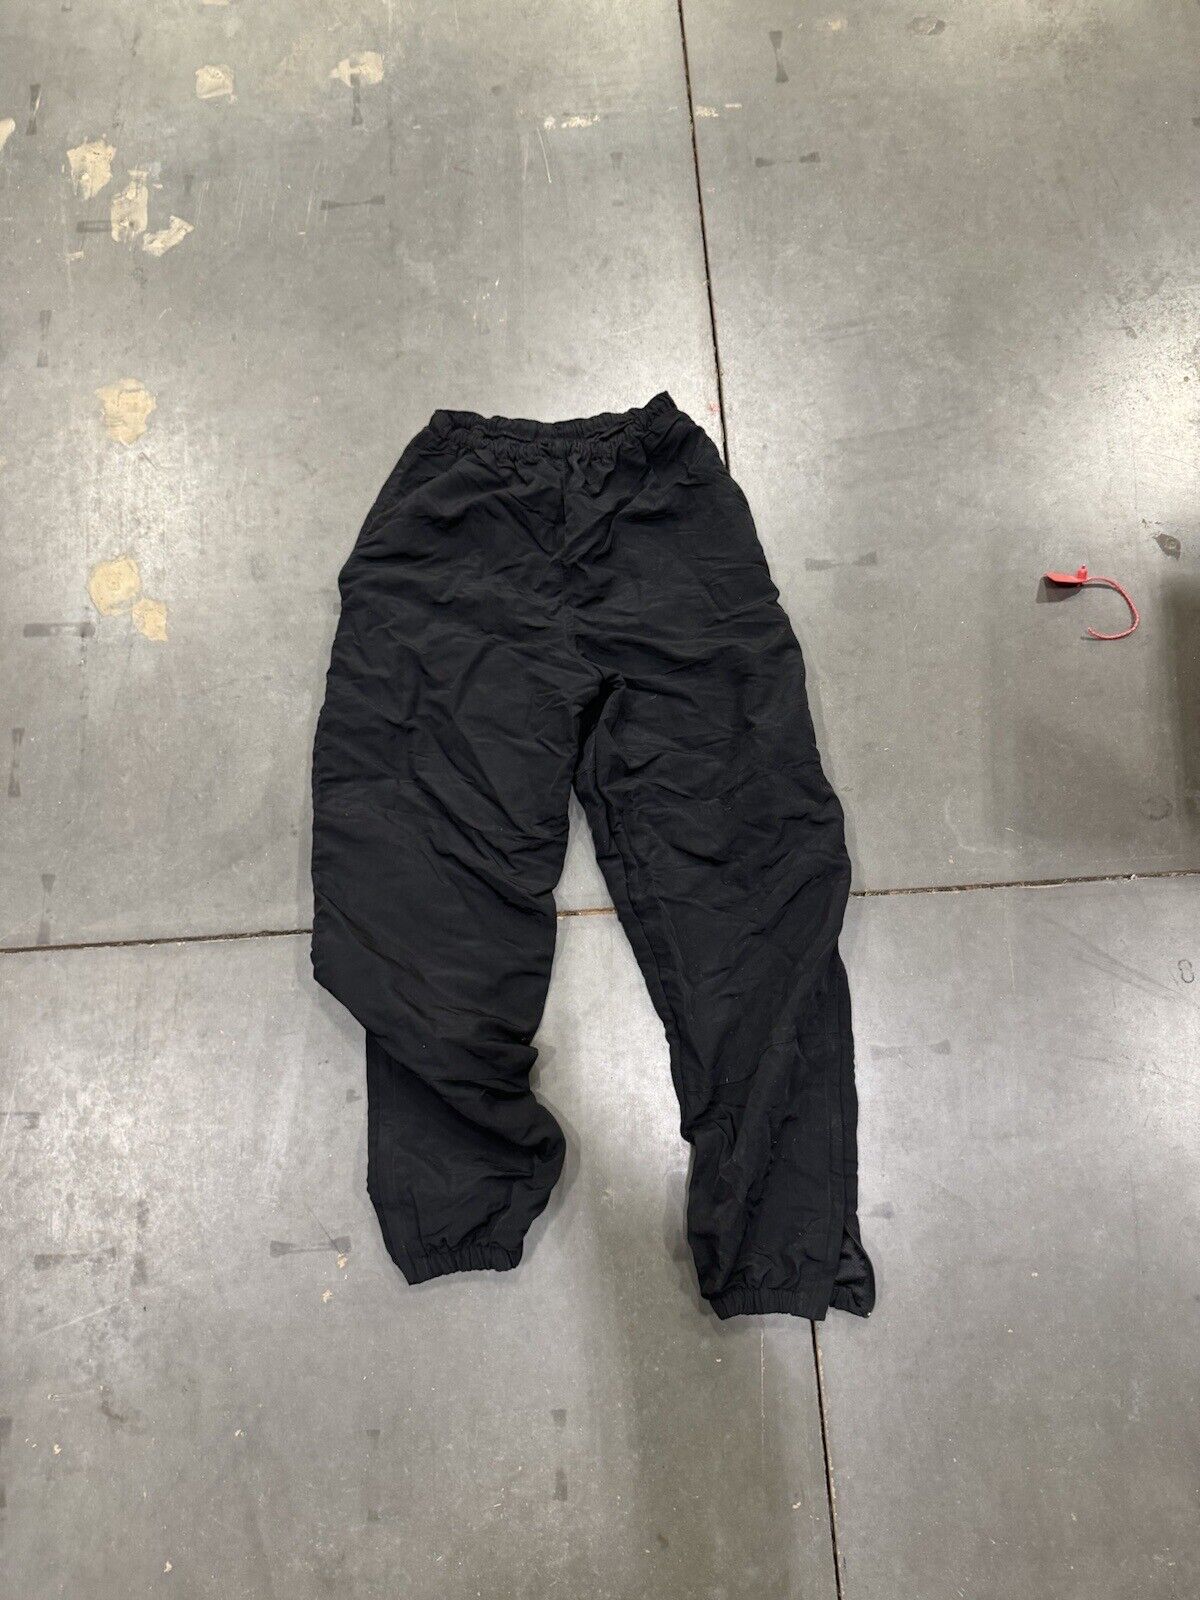 Men’s PFU Physical Fitness PT Uniform Pants Black Military Nylon Medium Long